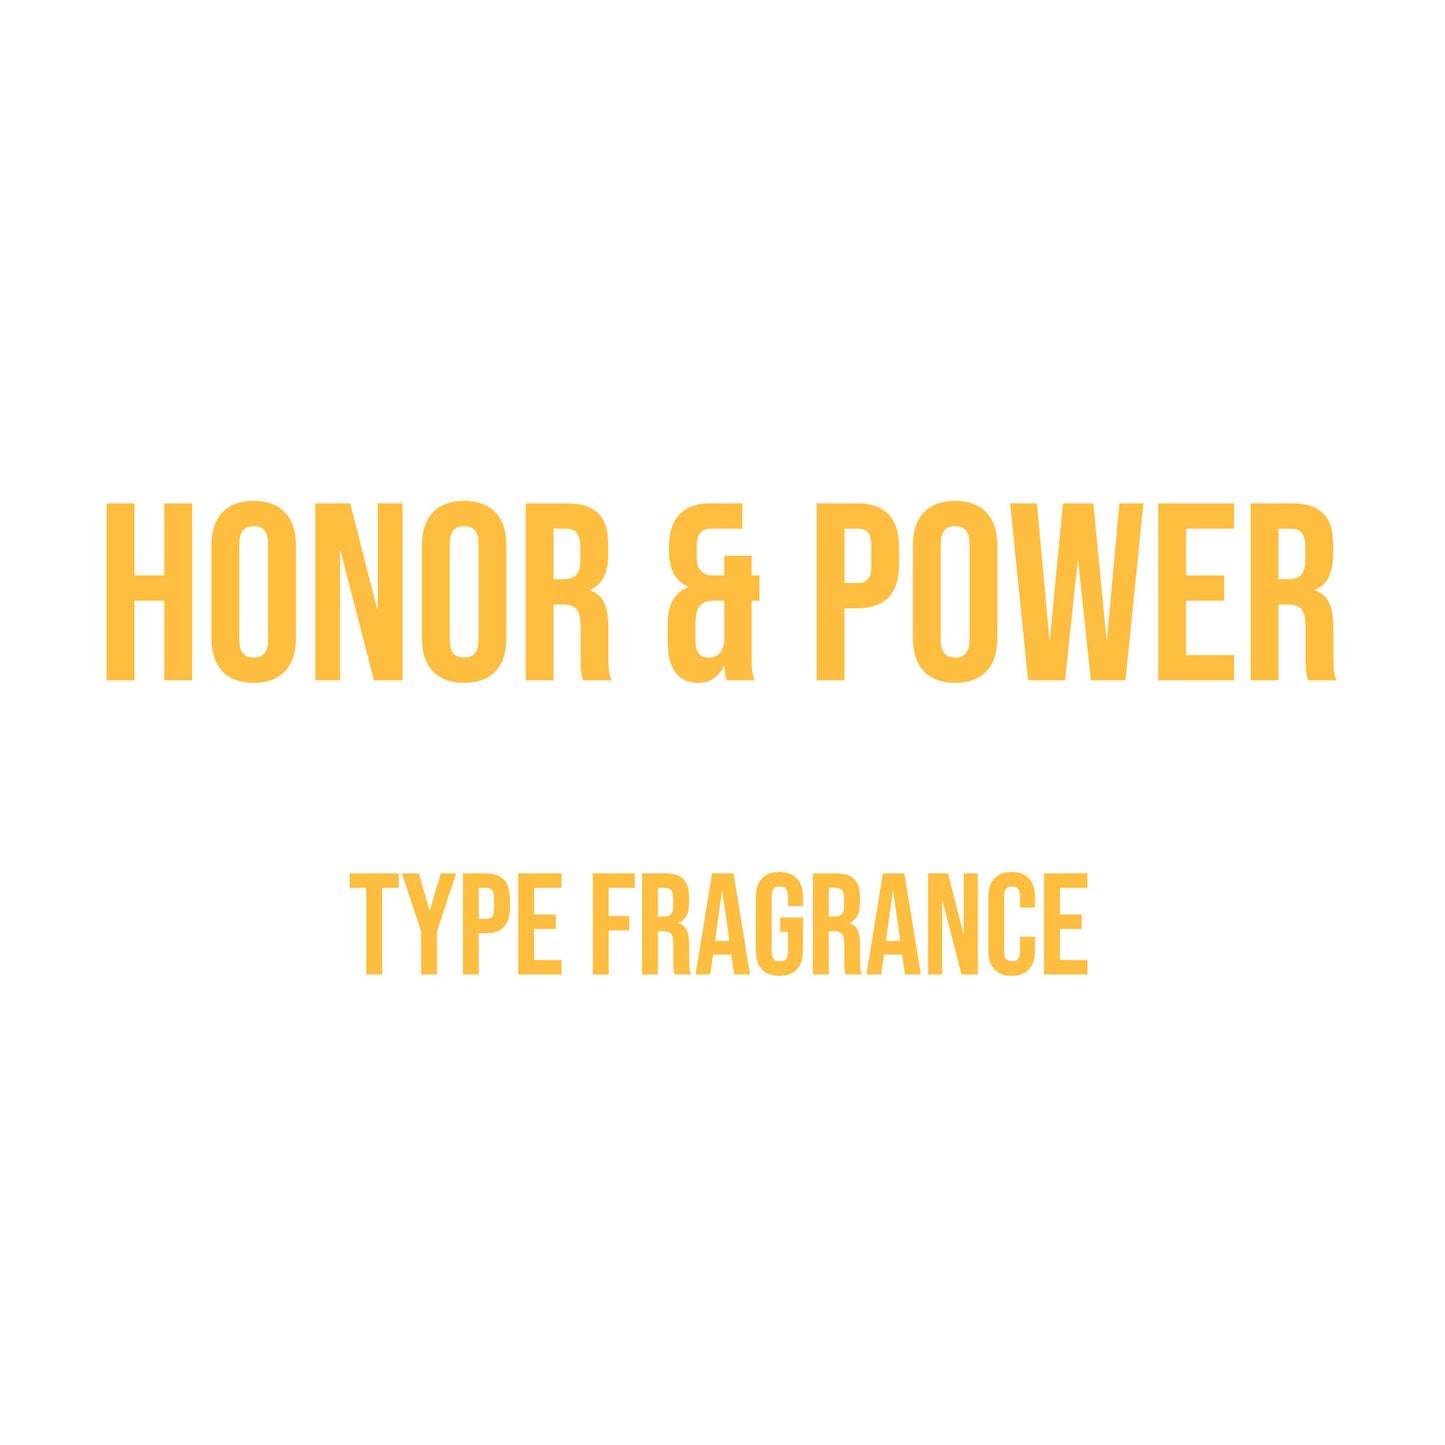 Honor & Power Type Fragrance